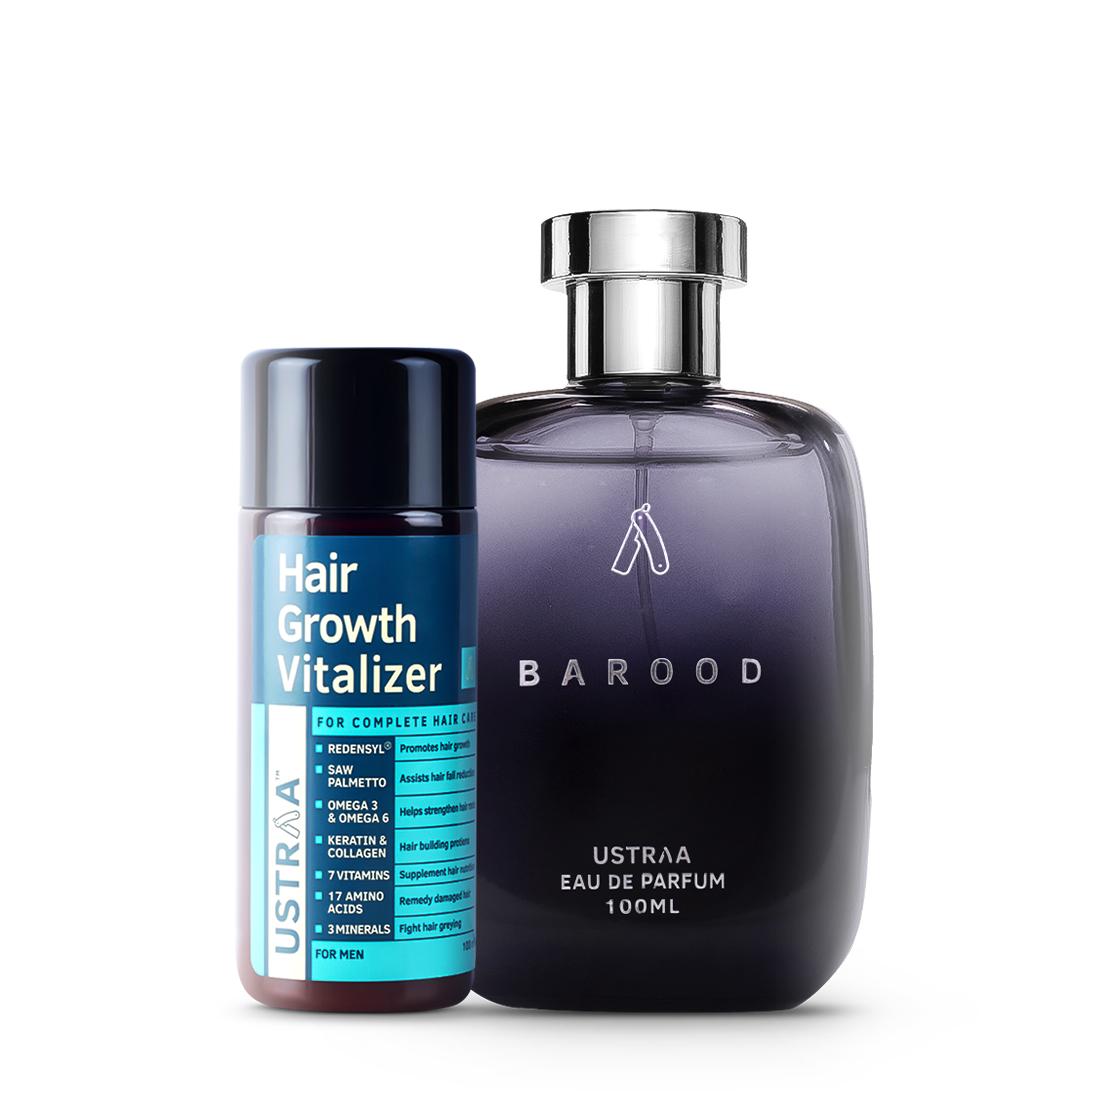 Barood EDP - Perfume for Men & Hair Growth Vitalizer